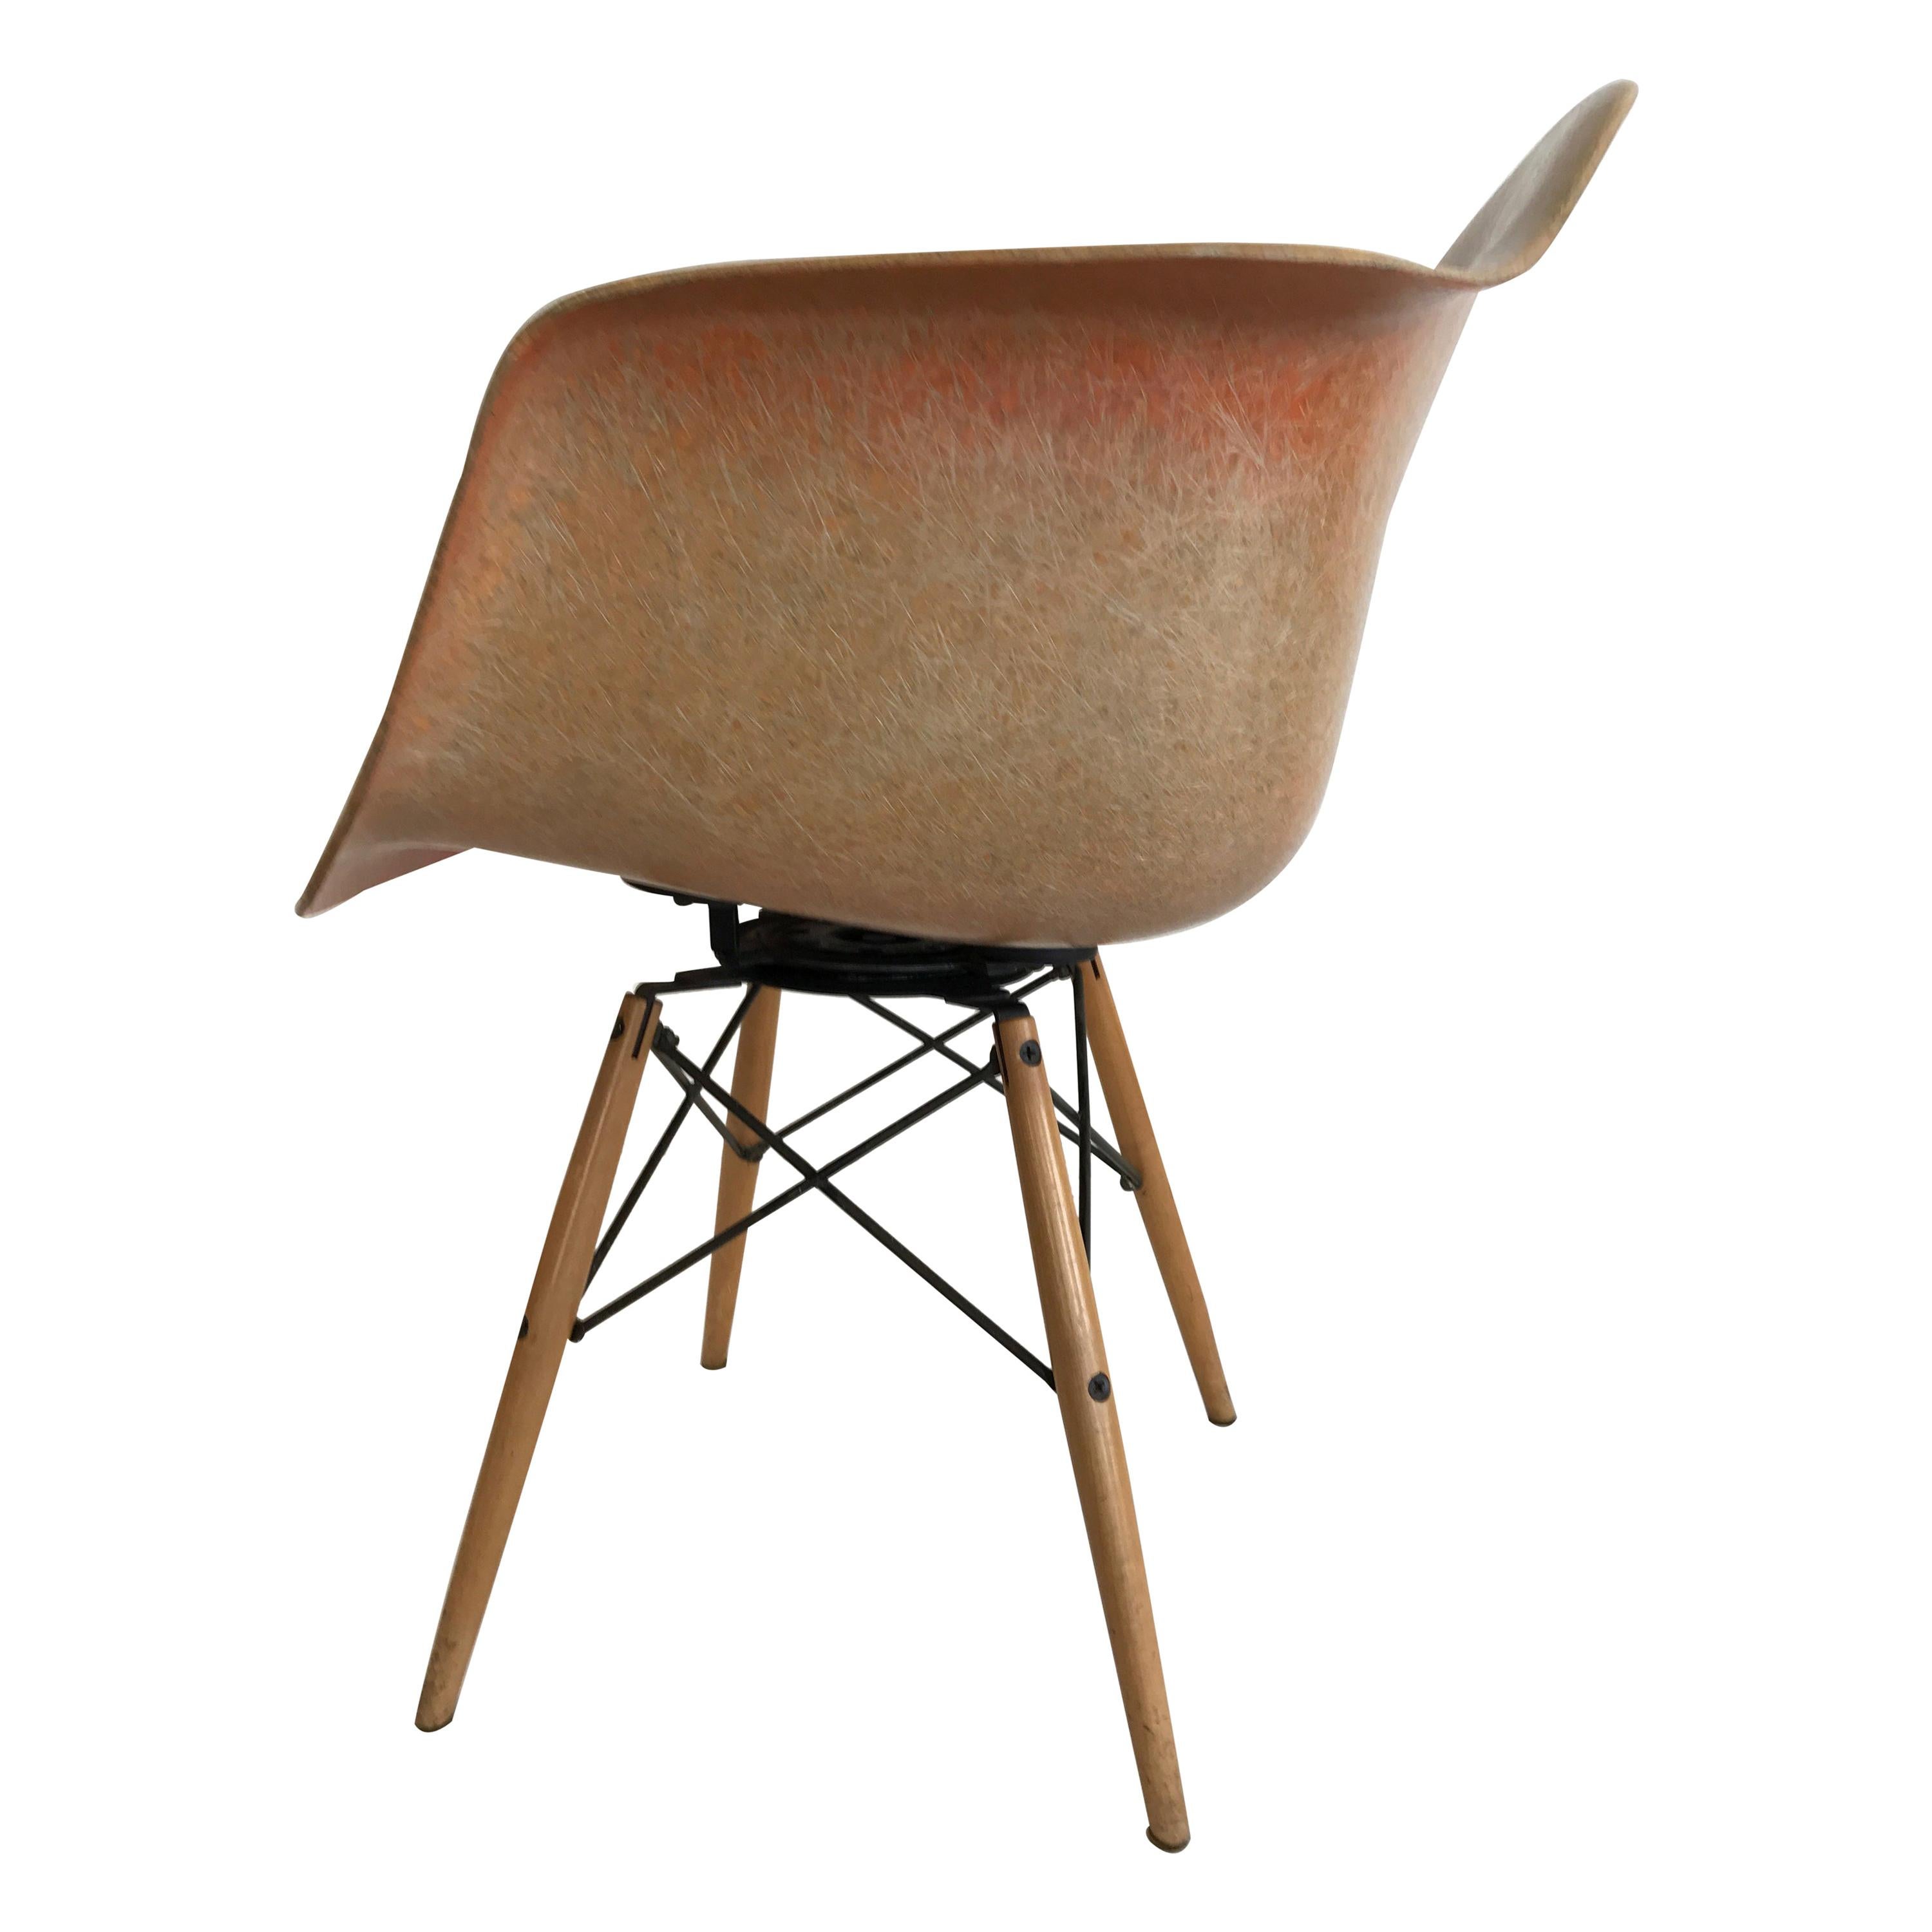 Charles Eames "PAW Chair" Swivel Fiber Glass Shell Dowel Leg aCa